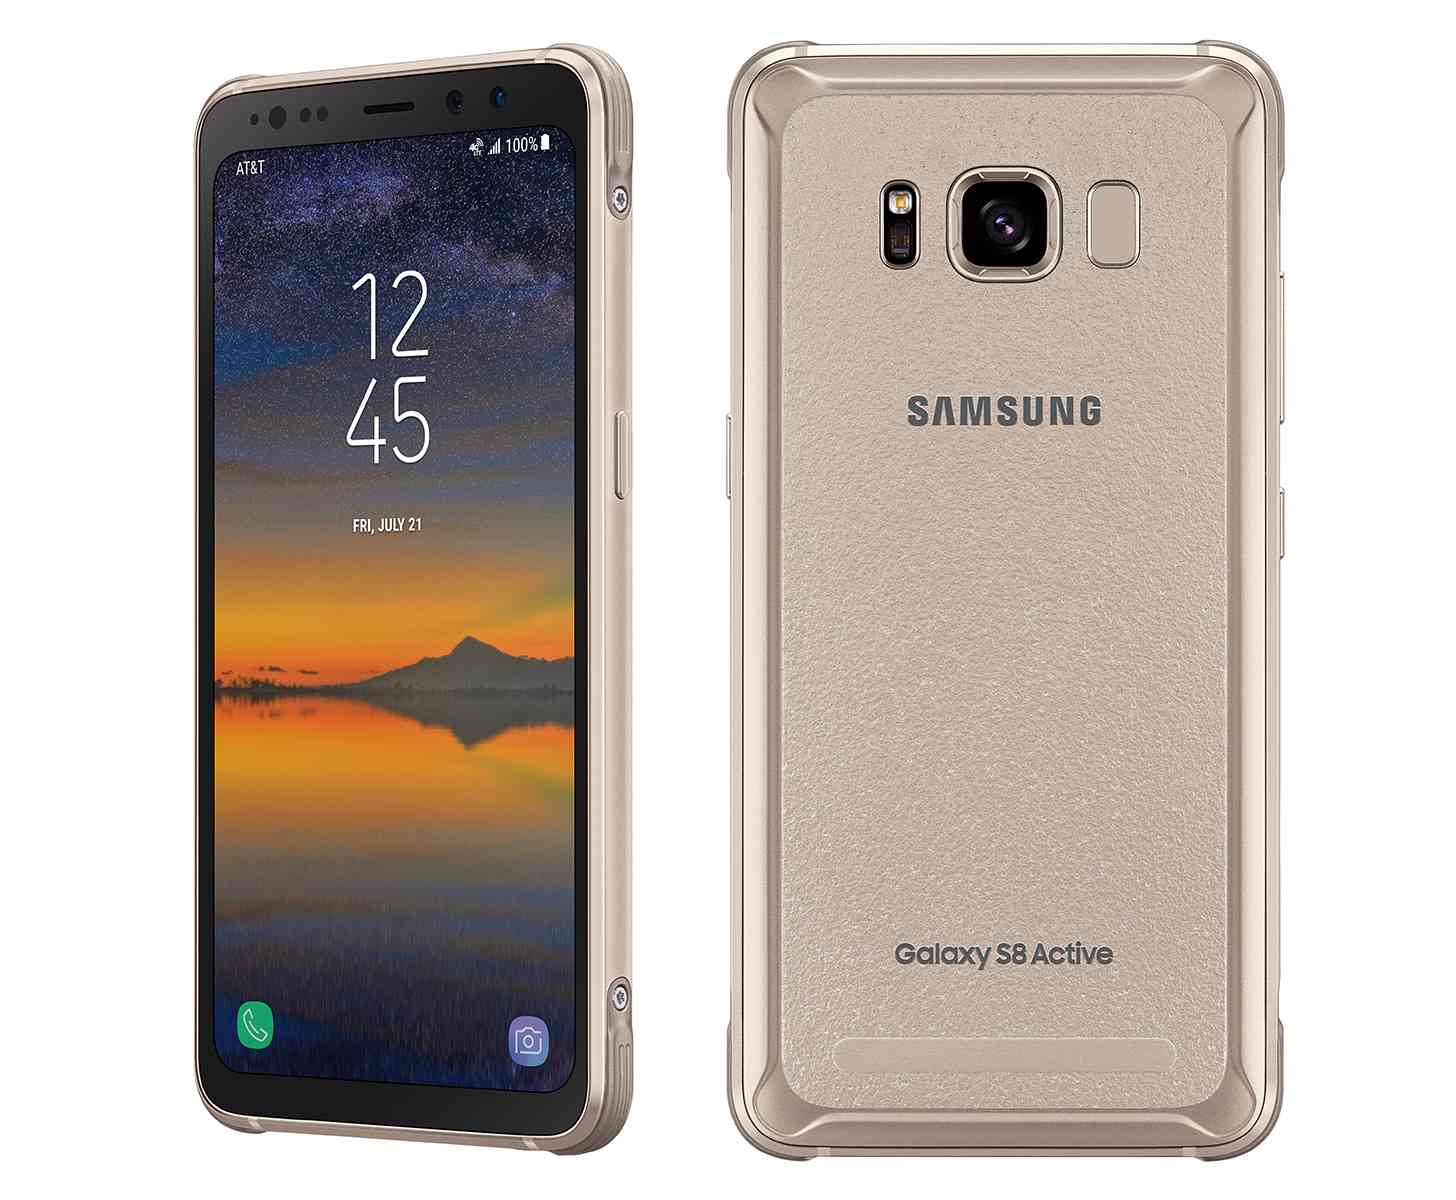 Samsung Galaxy S8 Active Titanium Gold AT&T